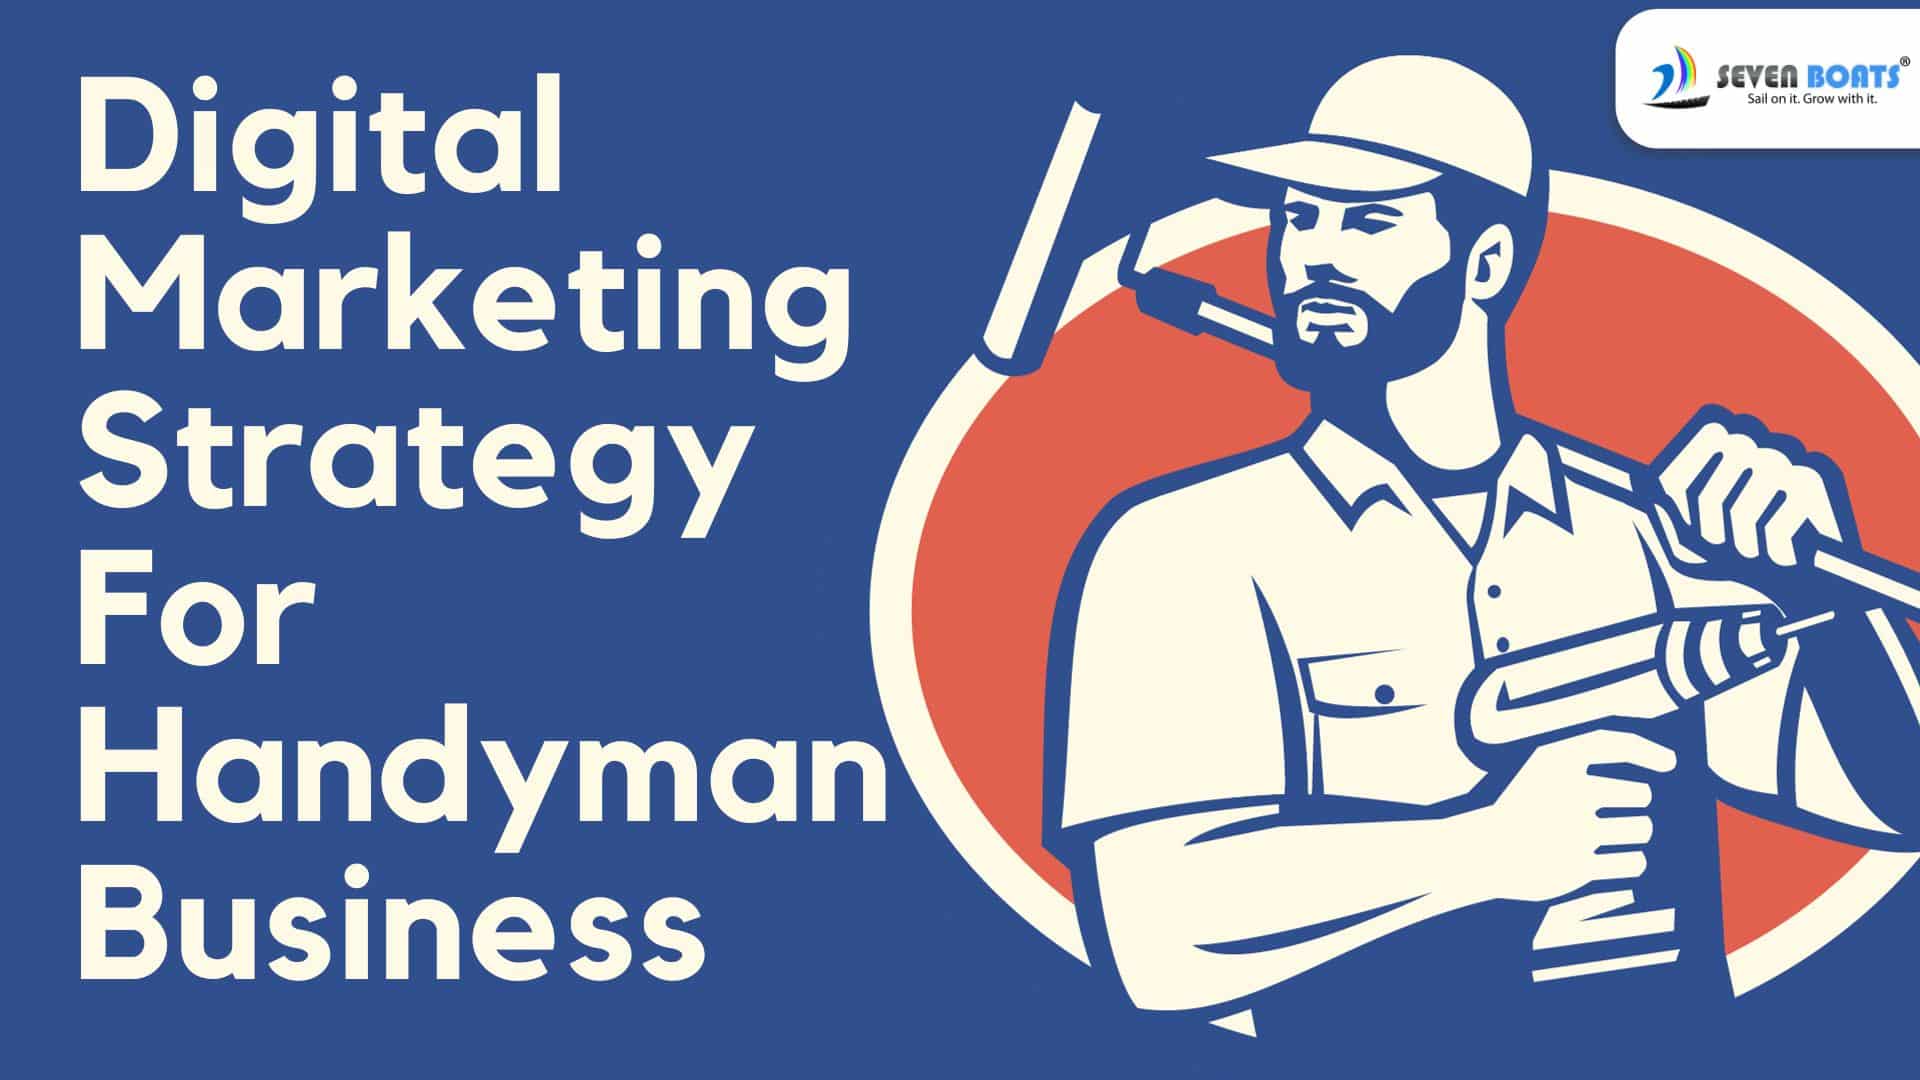 Digital Marketing Strategy For Handyman Business